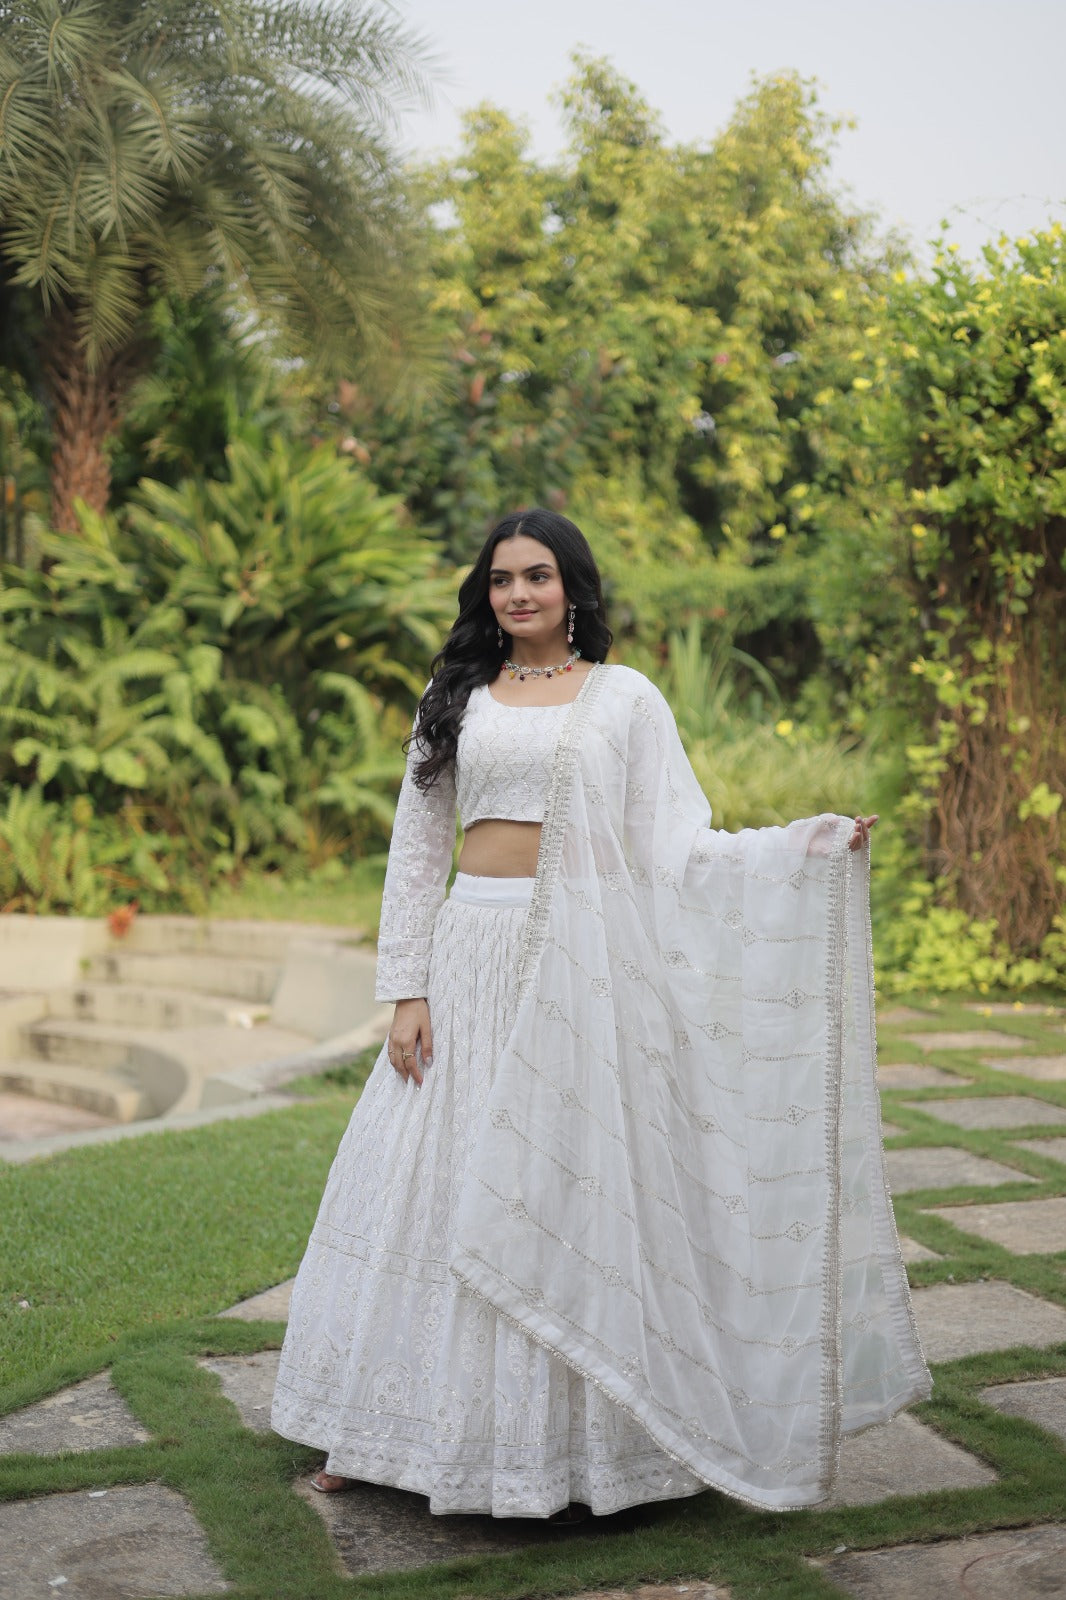 Green White Embroidered Lehenga Choli Indian Wedding Wear Lengha valentine  Gift | eBay